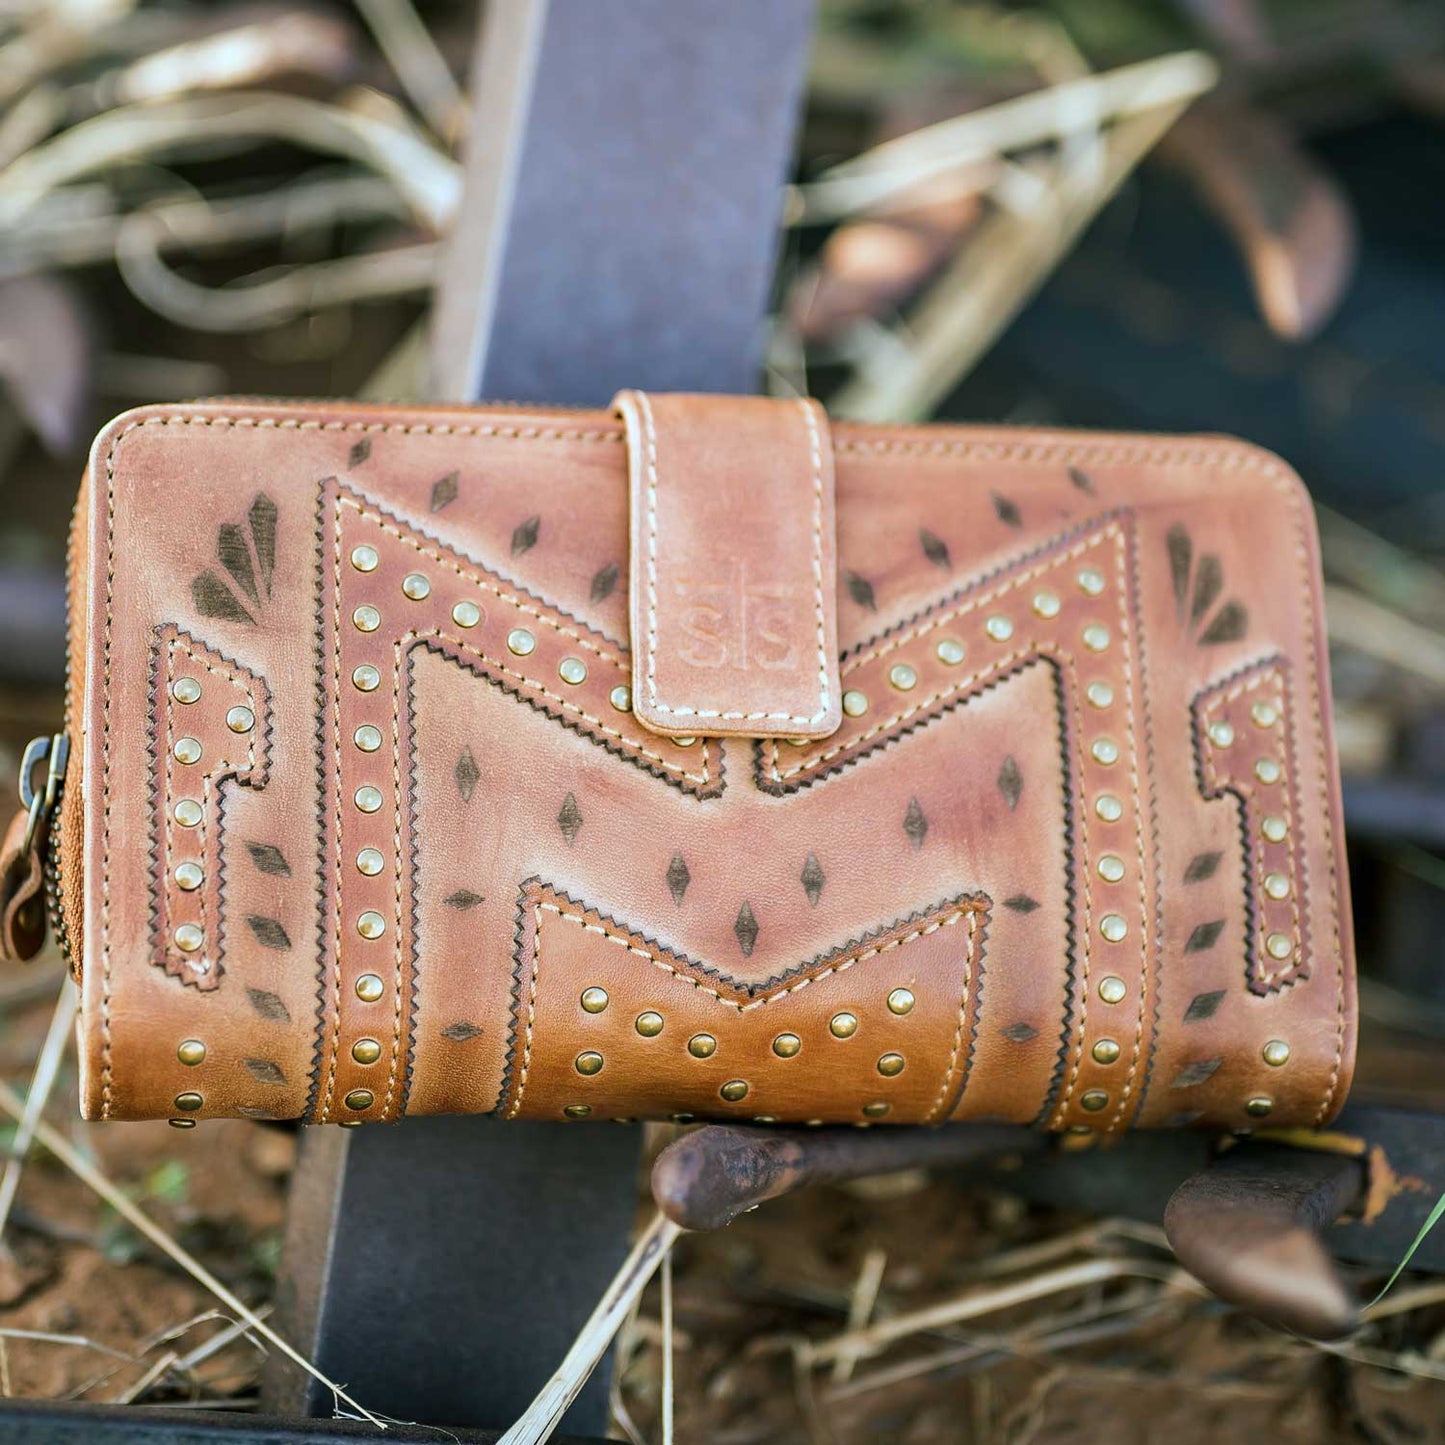 Chelsea Leather Wallet | Honey Brown